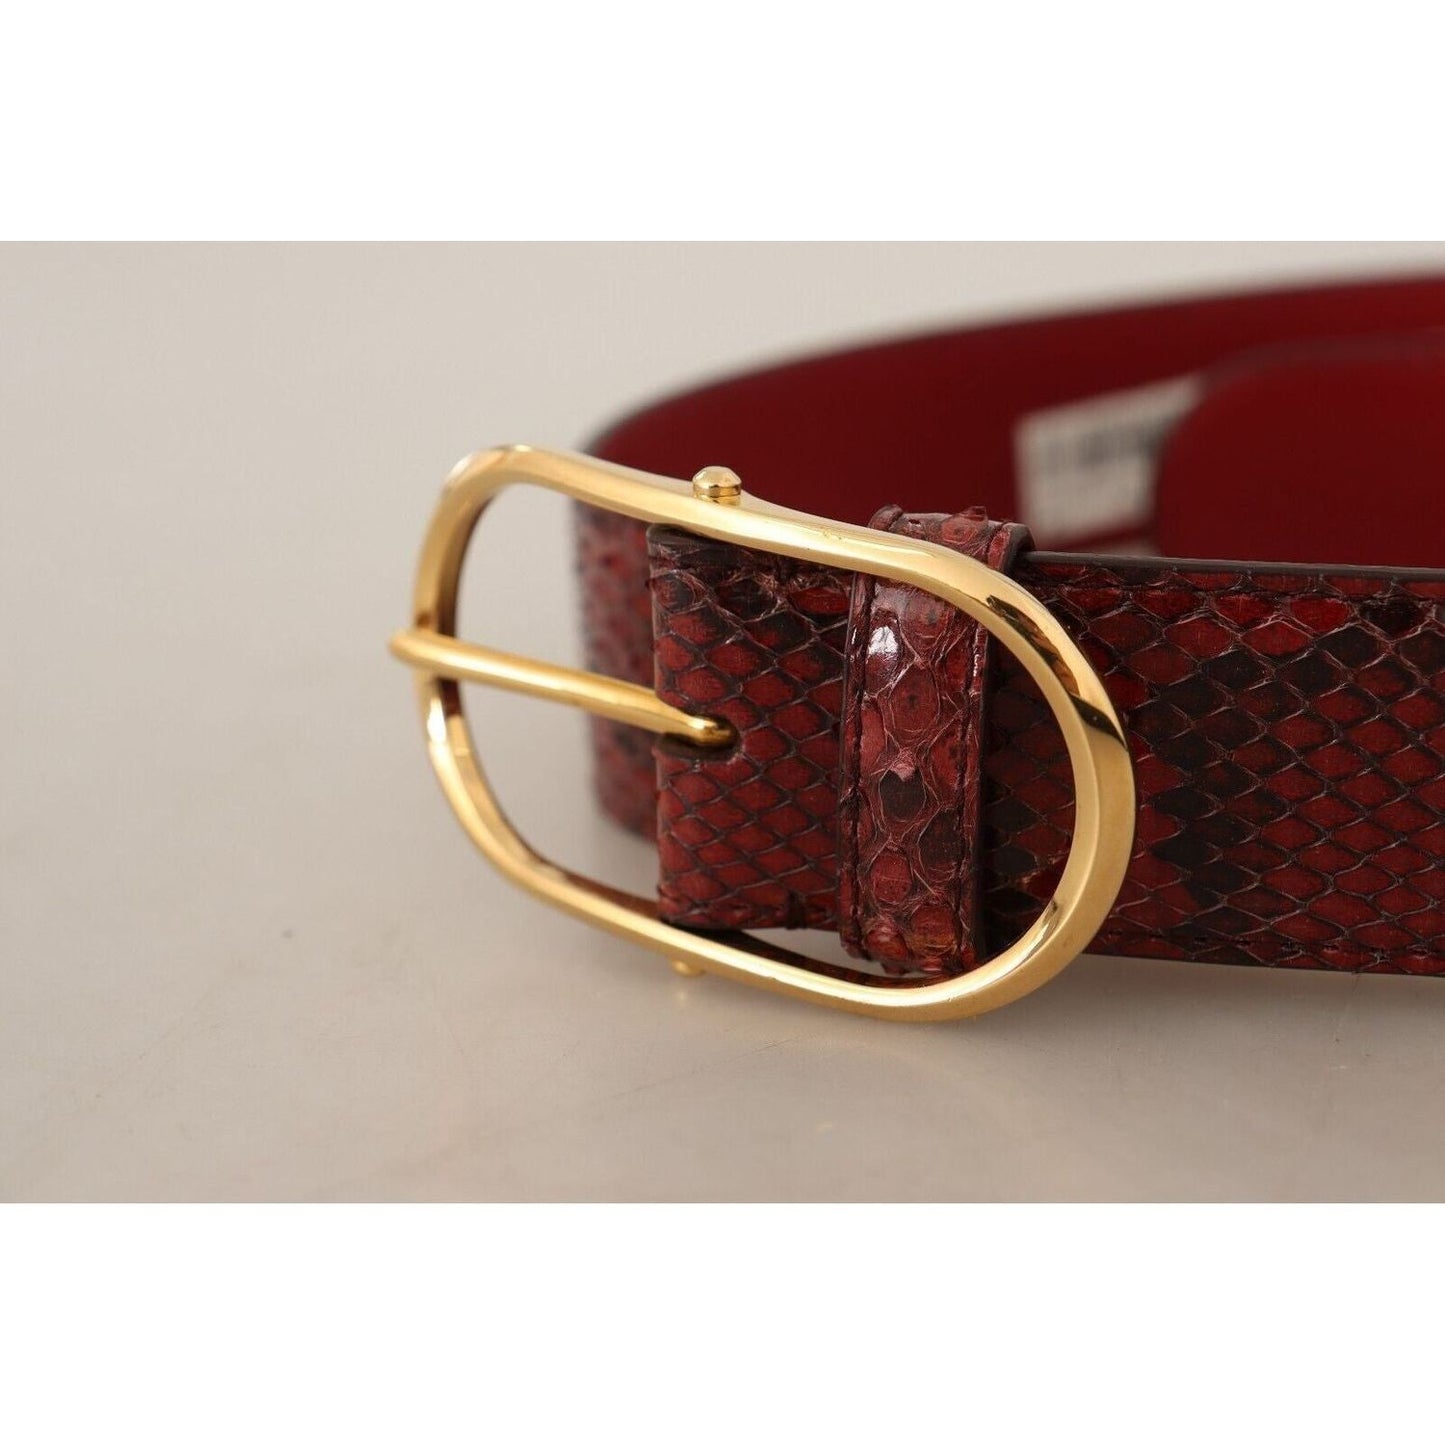 Dolce & Gabbana Elegant Red Snakeskin Leather Belt red-exotic-leather-gold-oval-buckle-belt-1 s-l1600-2-282-3a9a0bbf-2f8.jpg